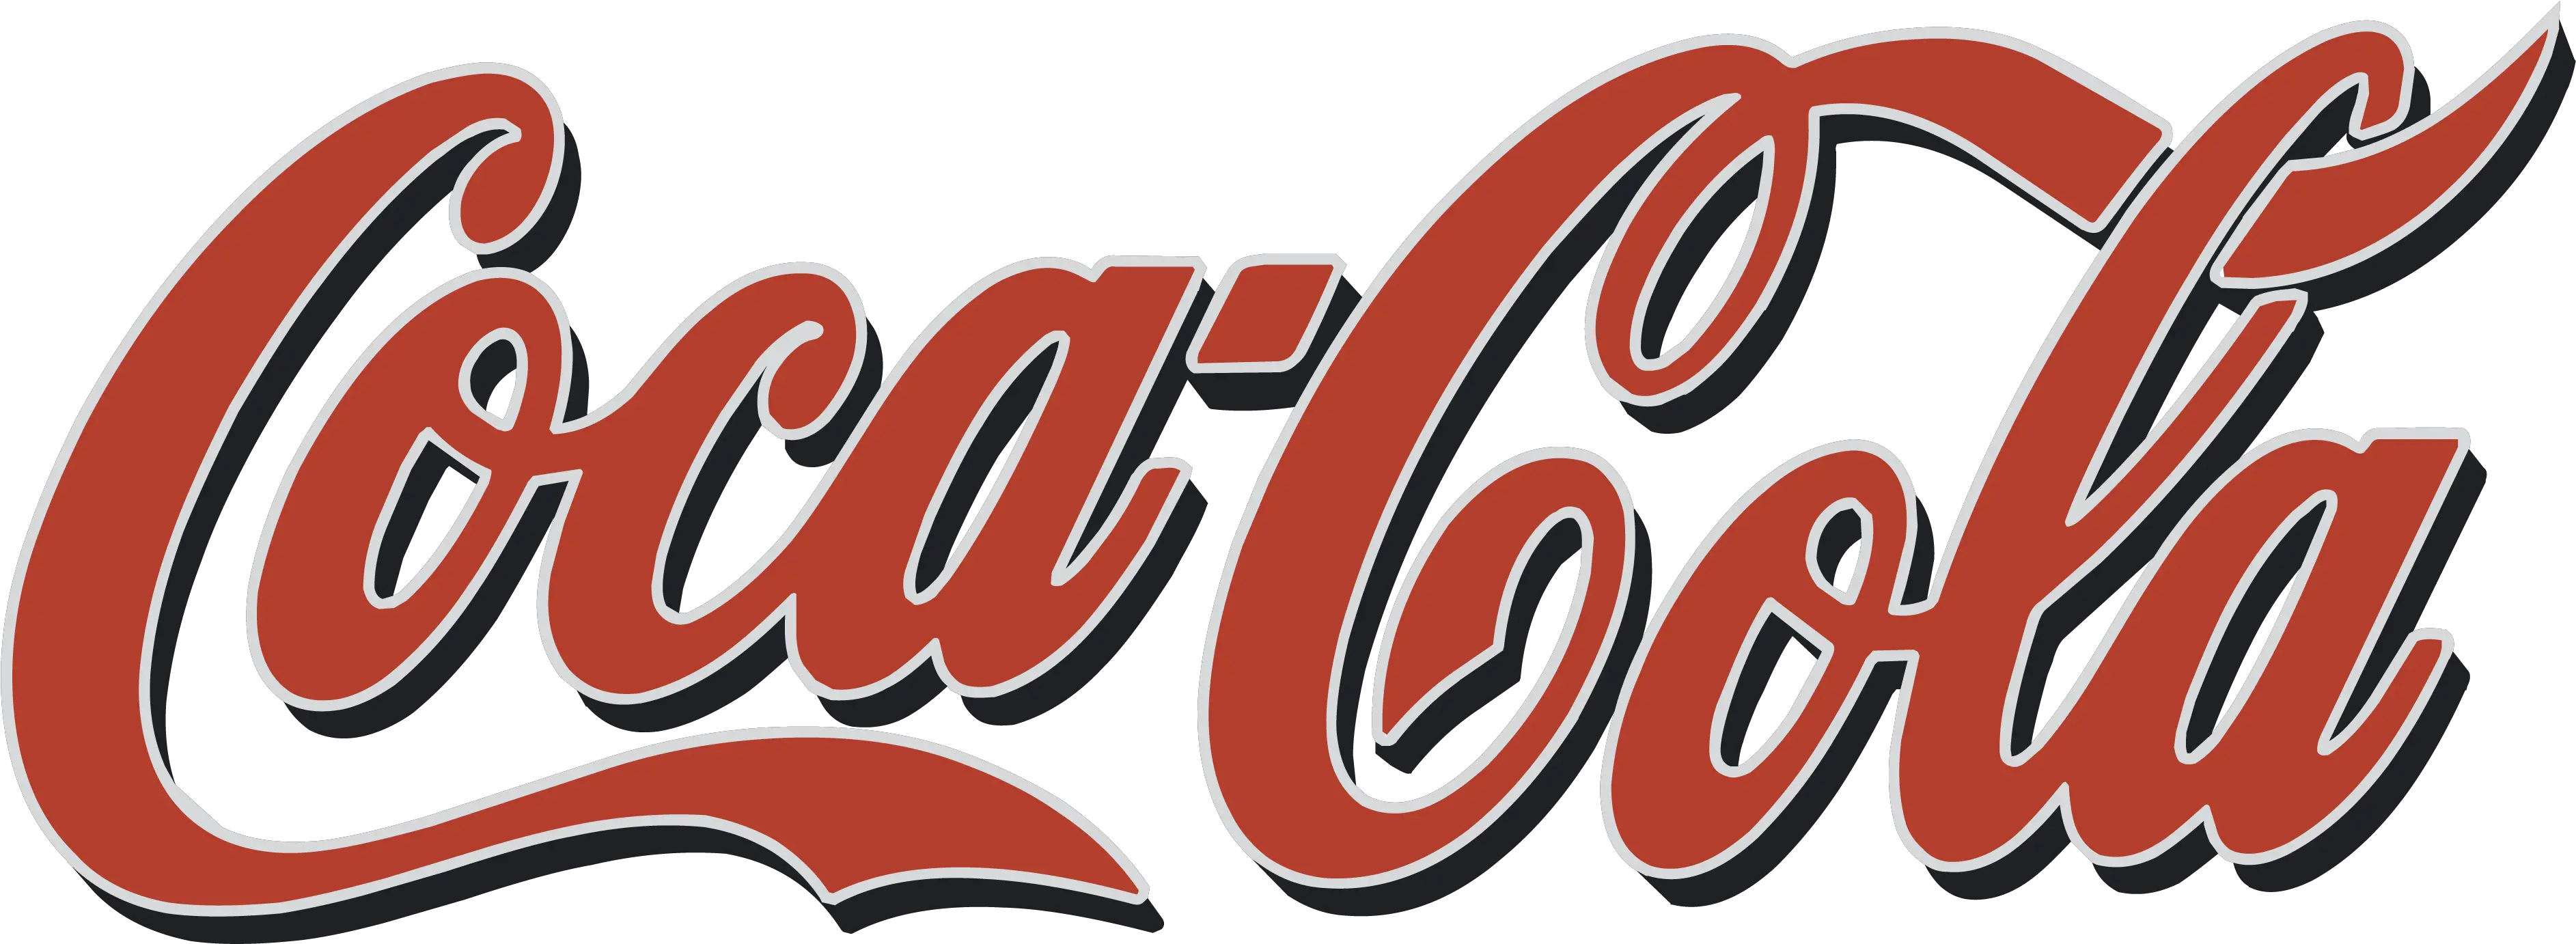 Coca Cola Logo Zeichen Emblem Symbol Geschichte Coca Cola Light Png Coca Cola Logos